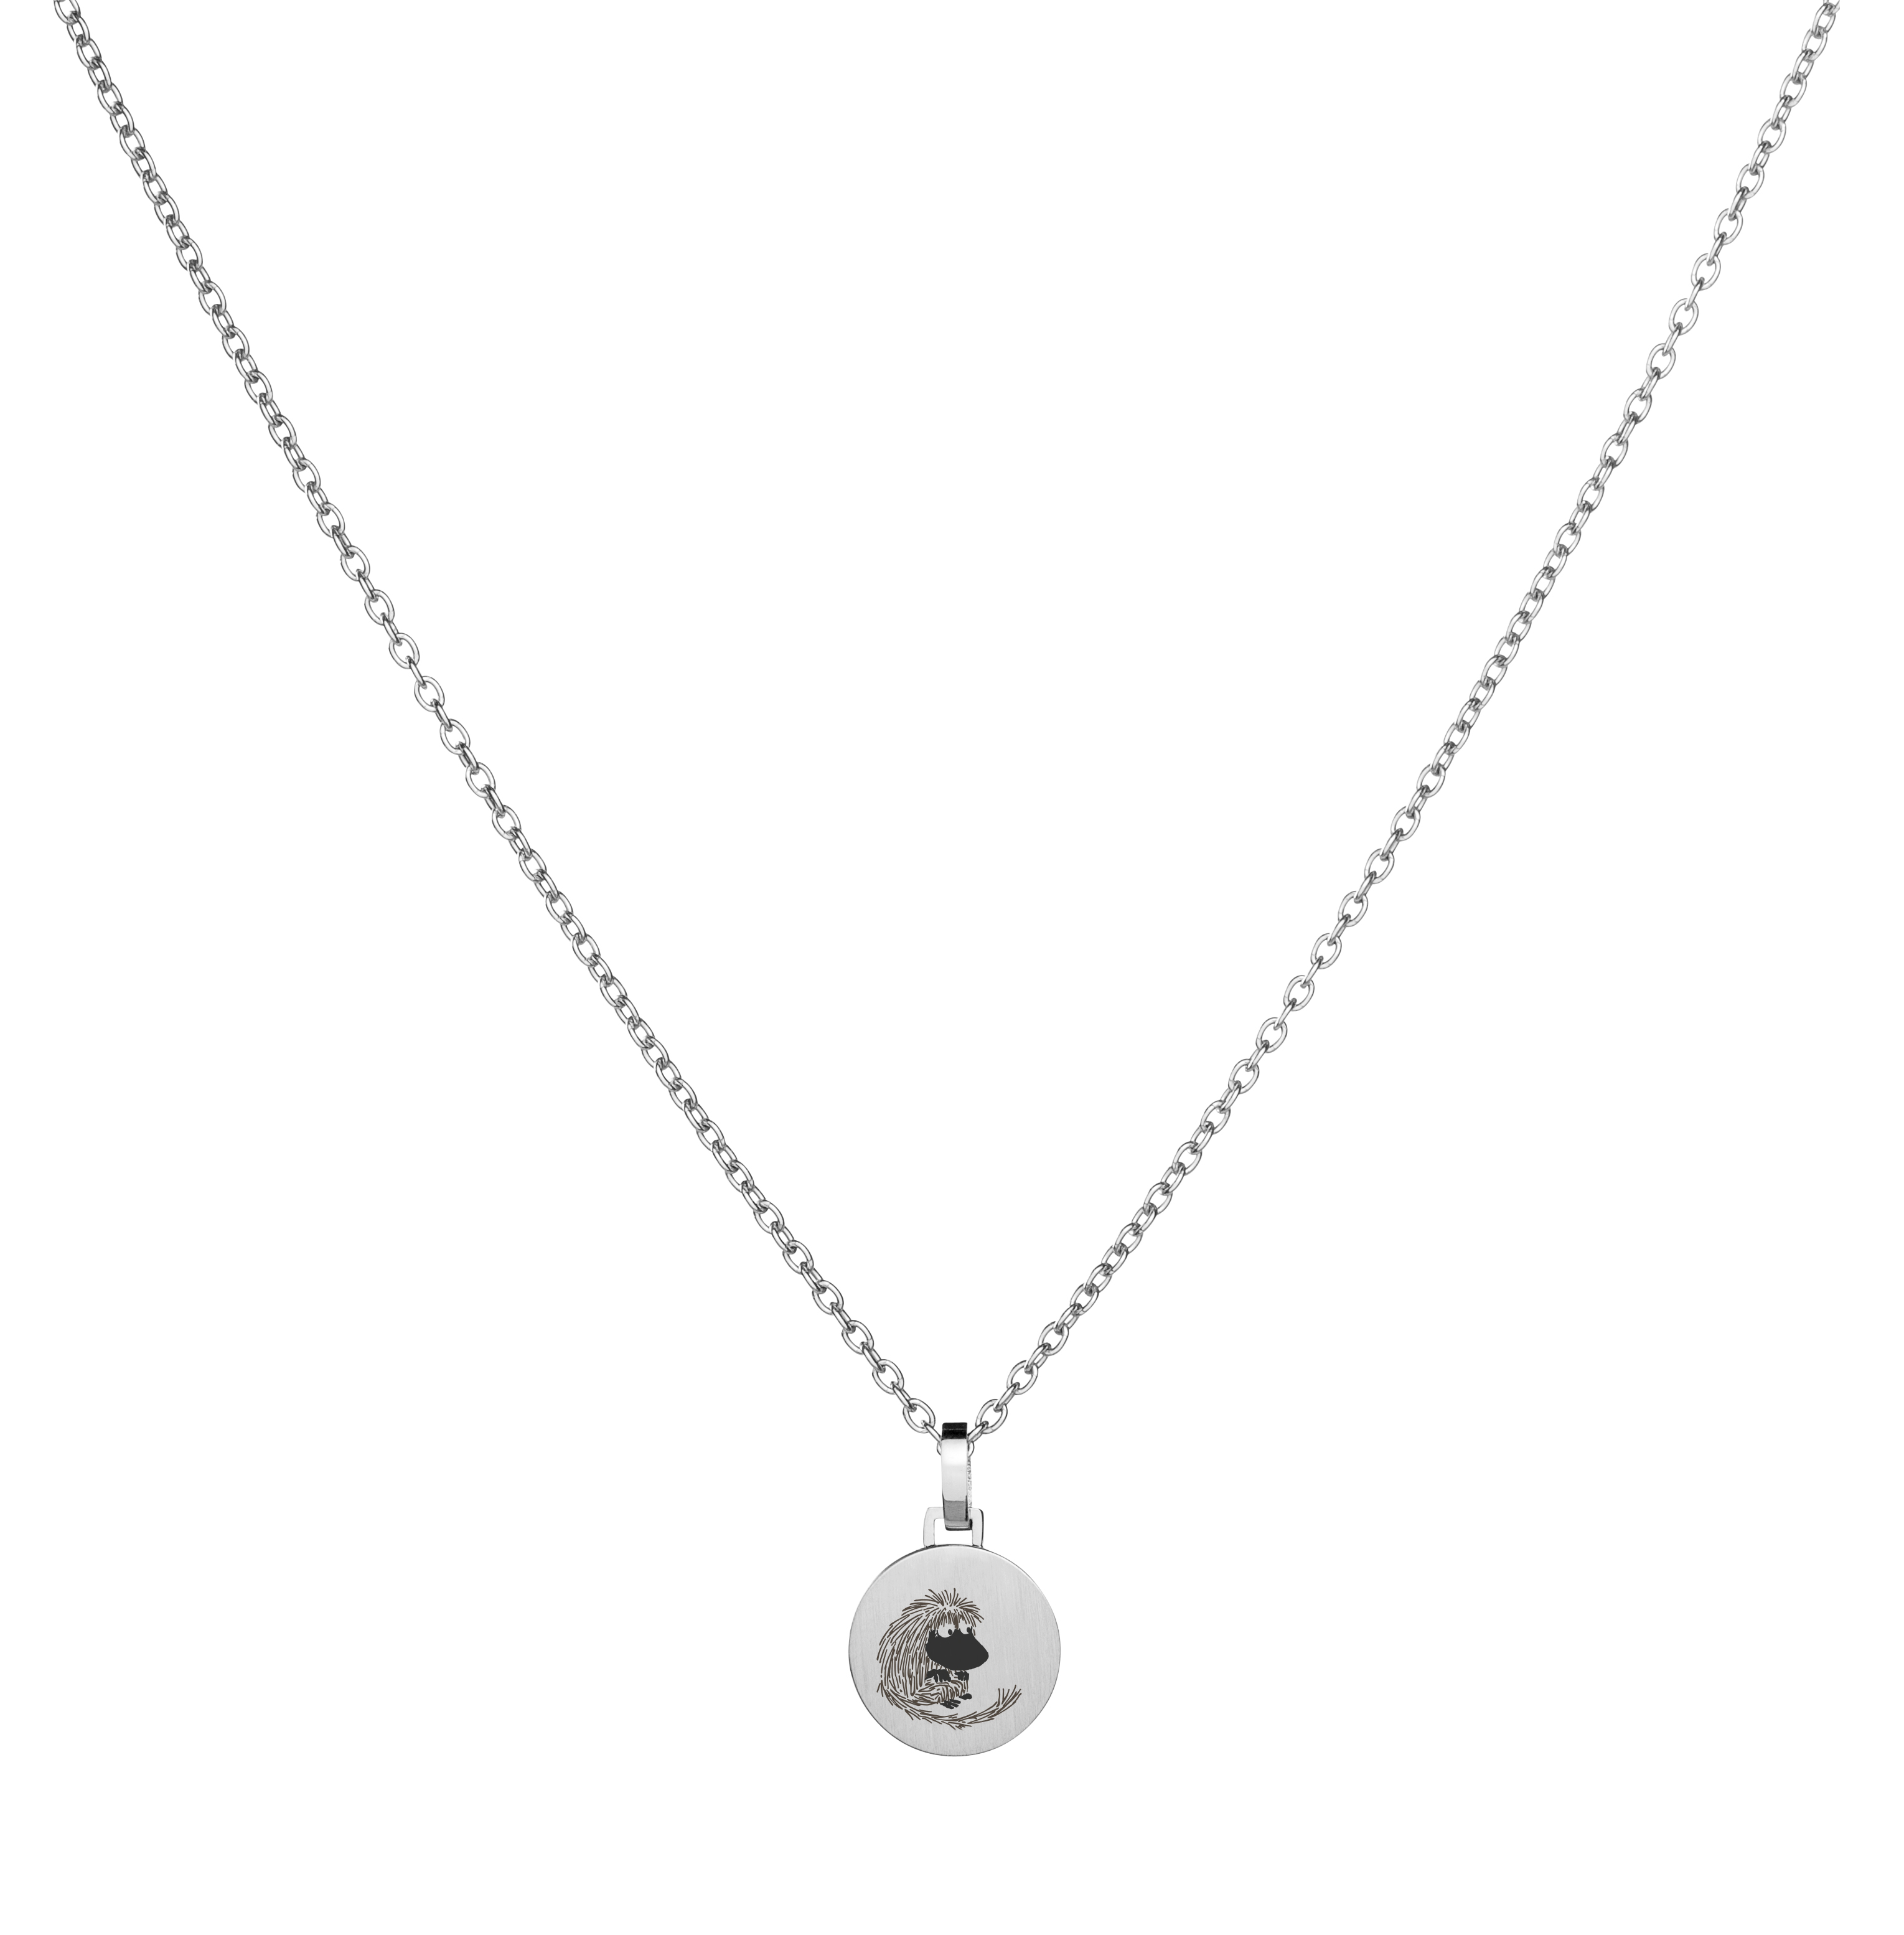 Saurum The Ancestor stainless steel pendant